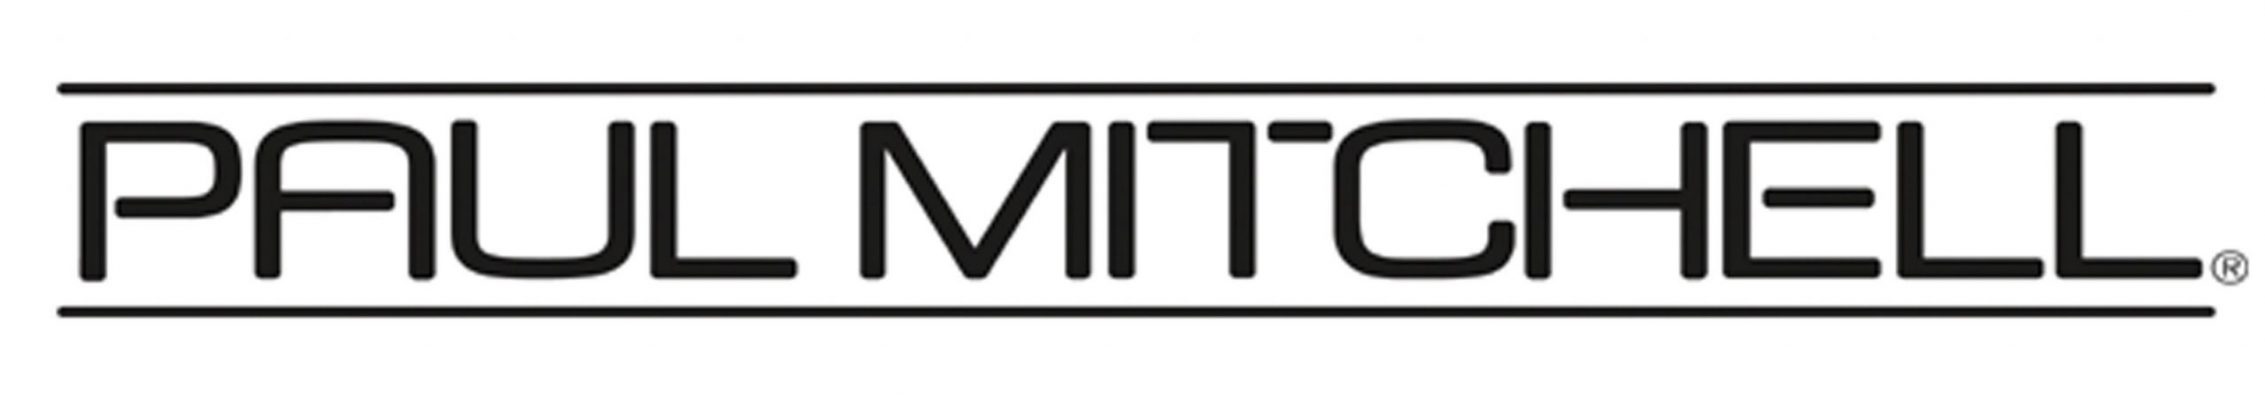 Paul-Mitchell-logo